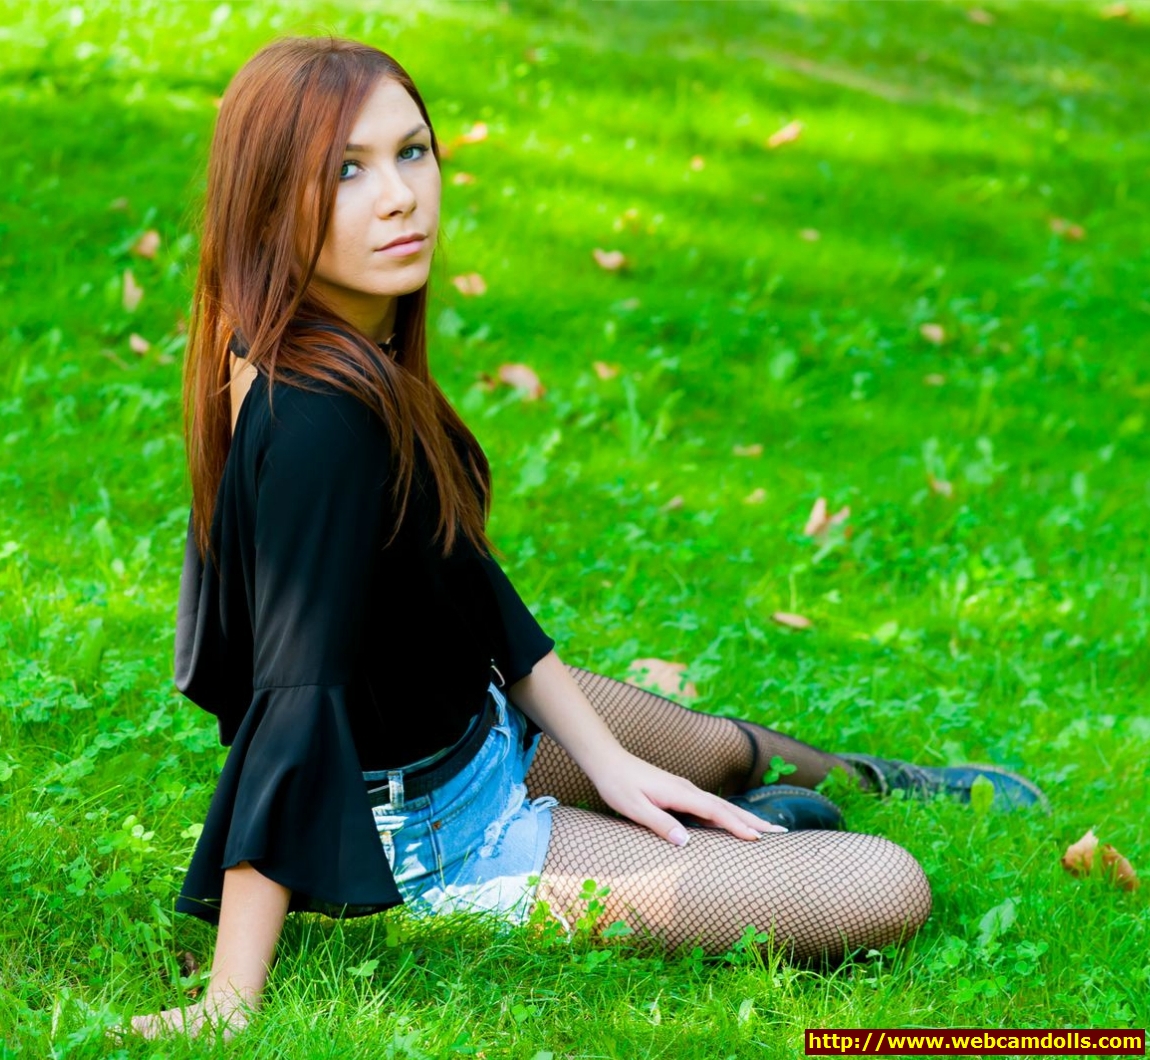 Redhead Girl in Black Fishnet Pantyhose and Black Shirt on Webcamdolls